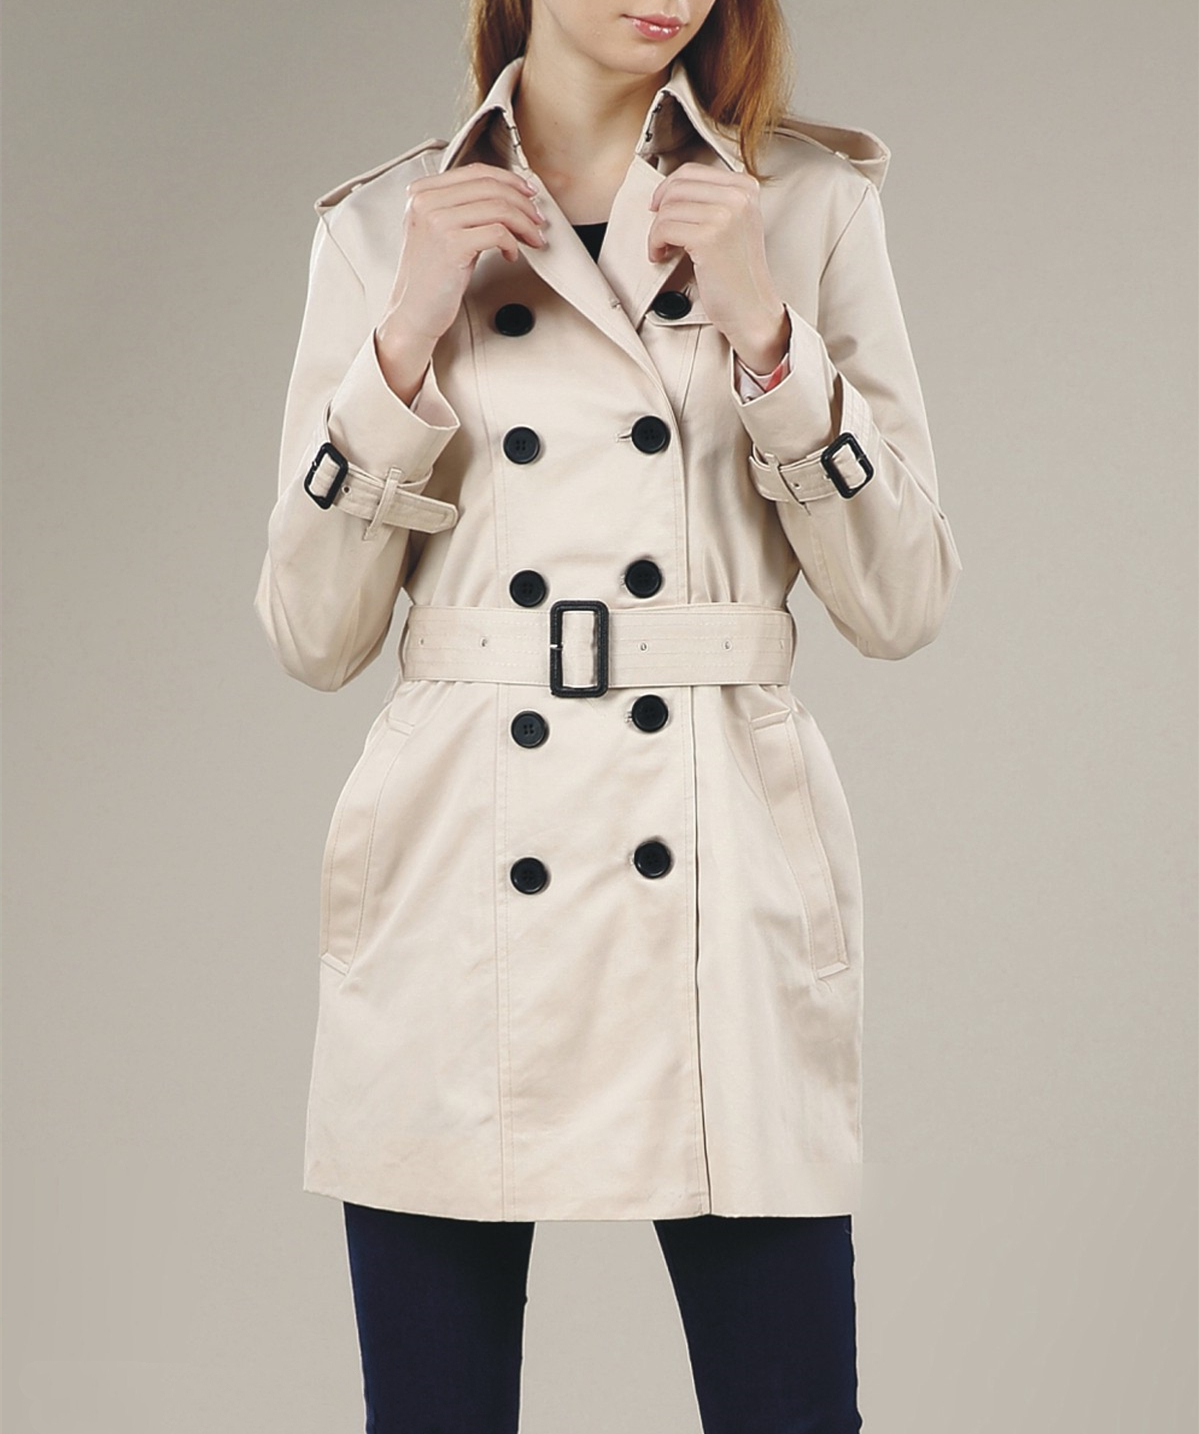 Women Fashion Brand Windbreaker England Coat Long Trench Coat/عالية الجودة مزدوجة الصدر للنساء مزاج S-XXL